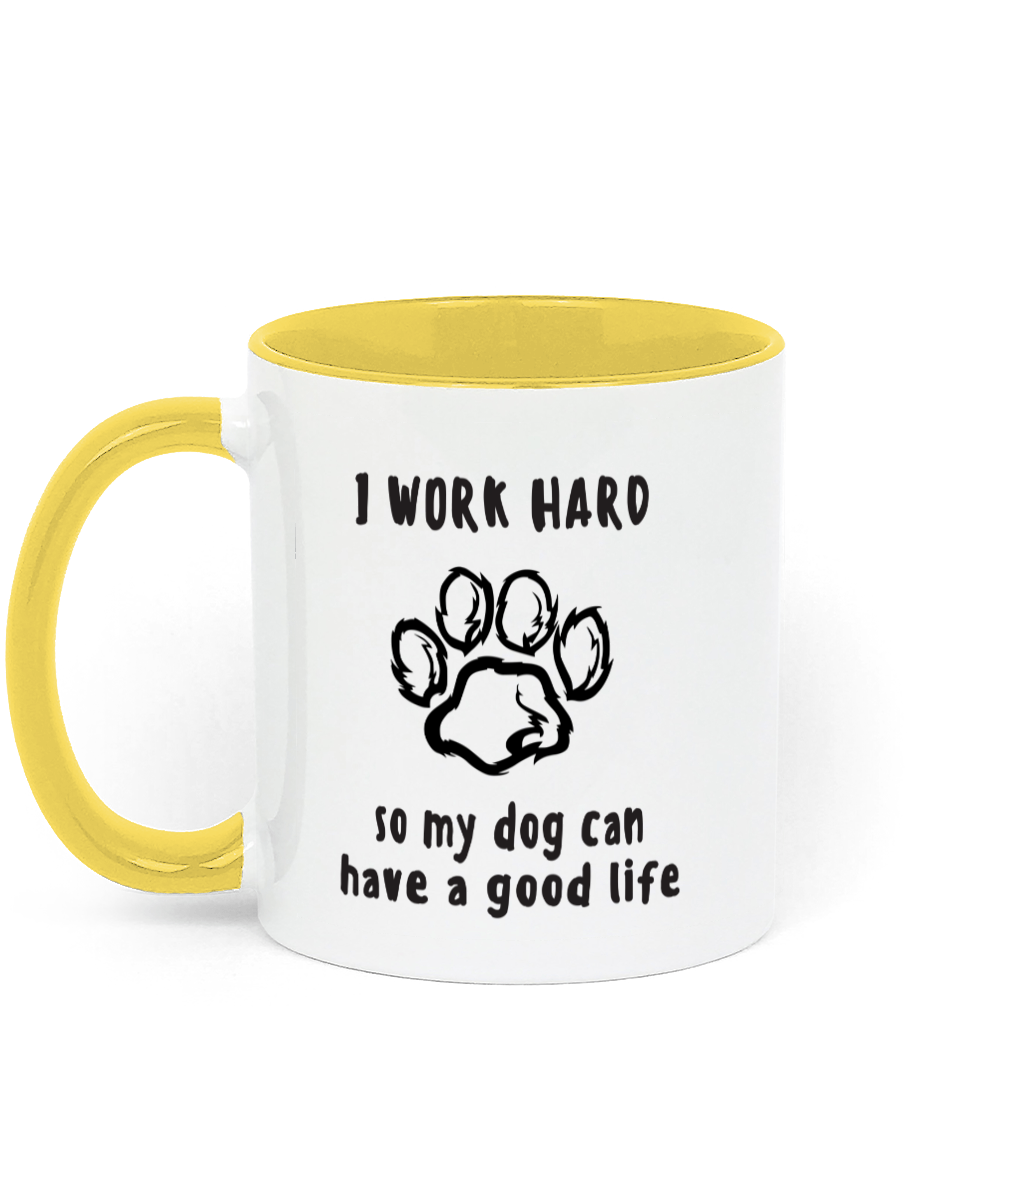 I Work Hard so My Dog Can Have a Good life. 11 oz mug. Dog Lover.  Perfect Gift. Two-toned Mug. Yellow.